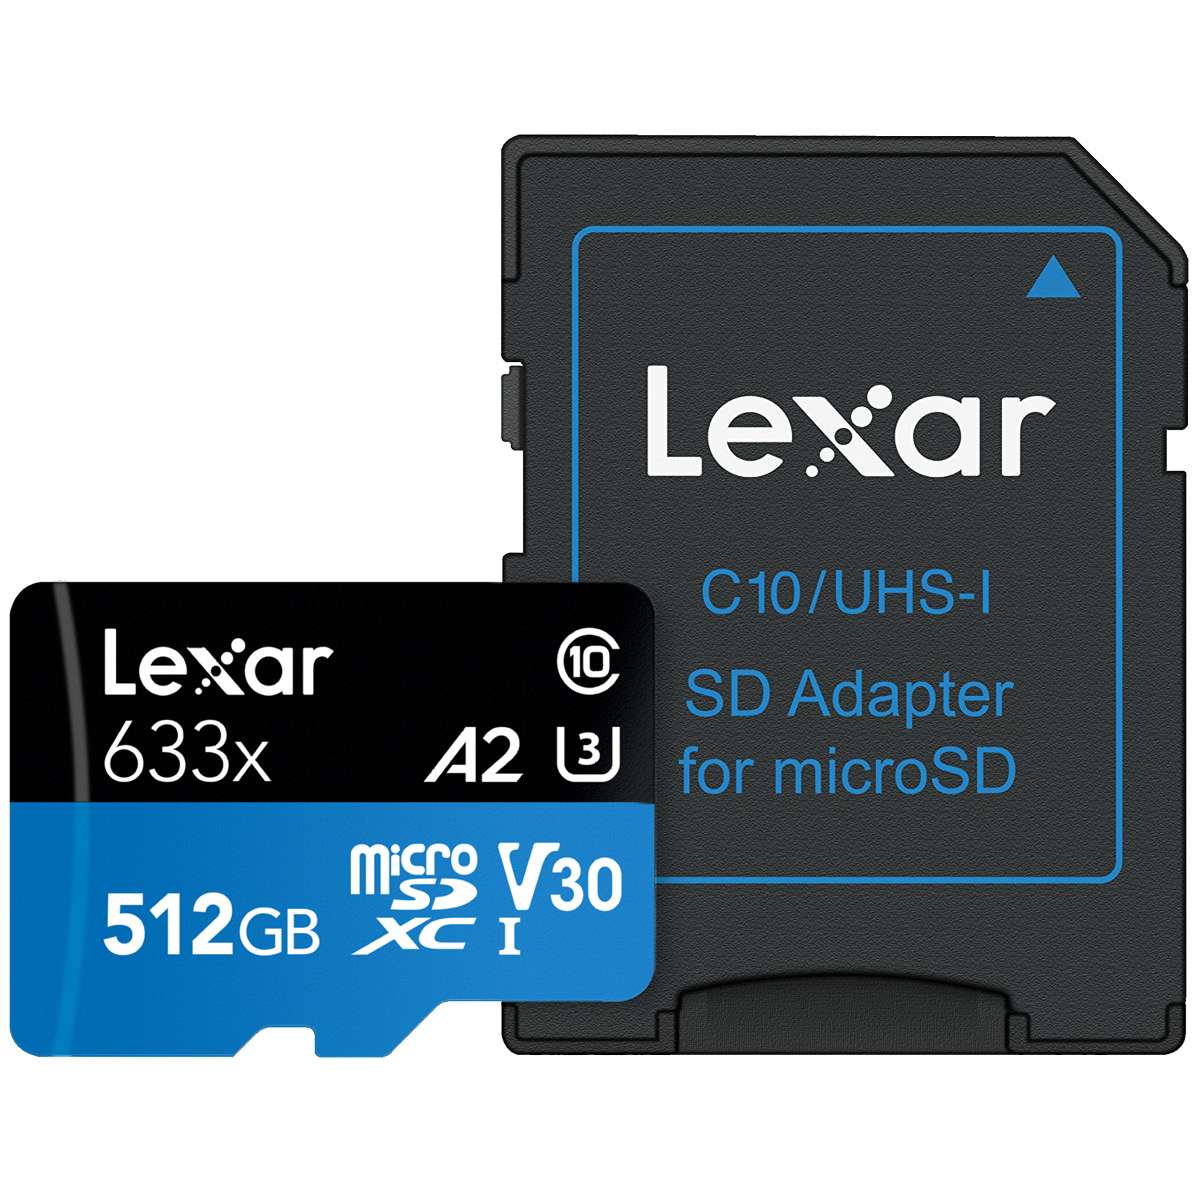 Lexar 512 GB Micro SDXC Blue 633x